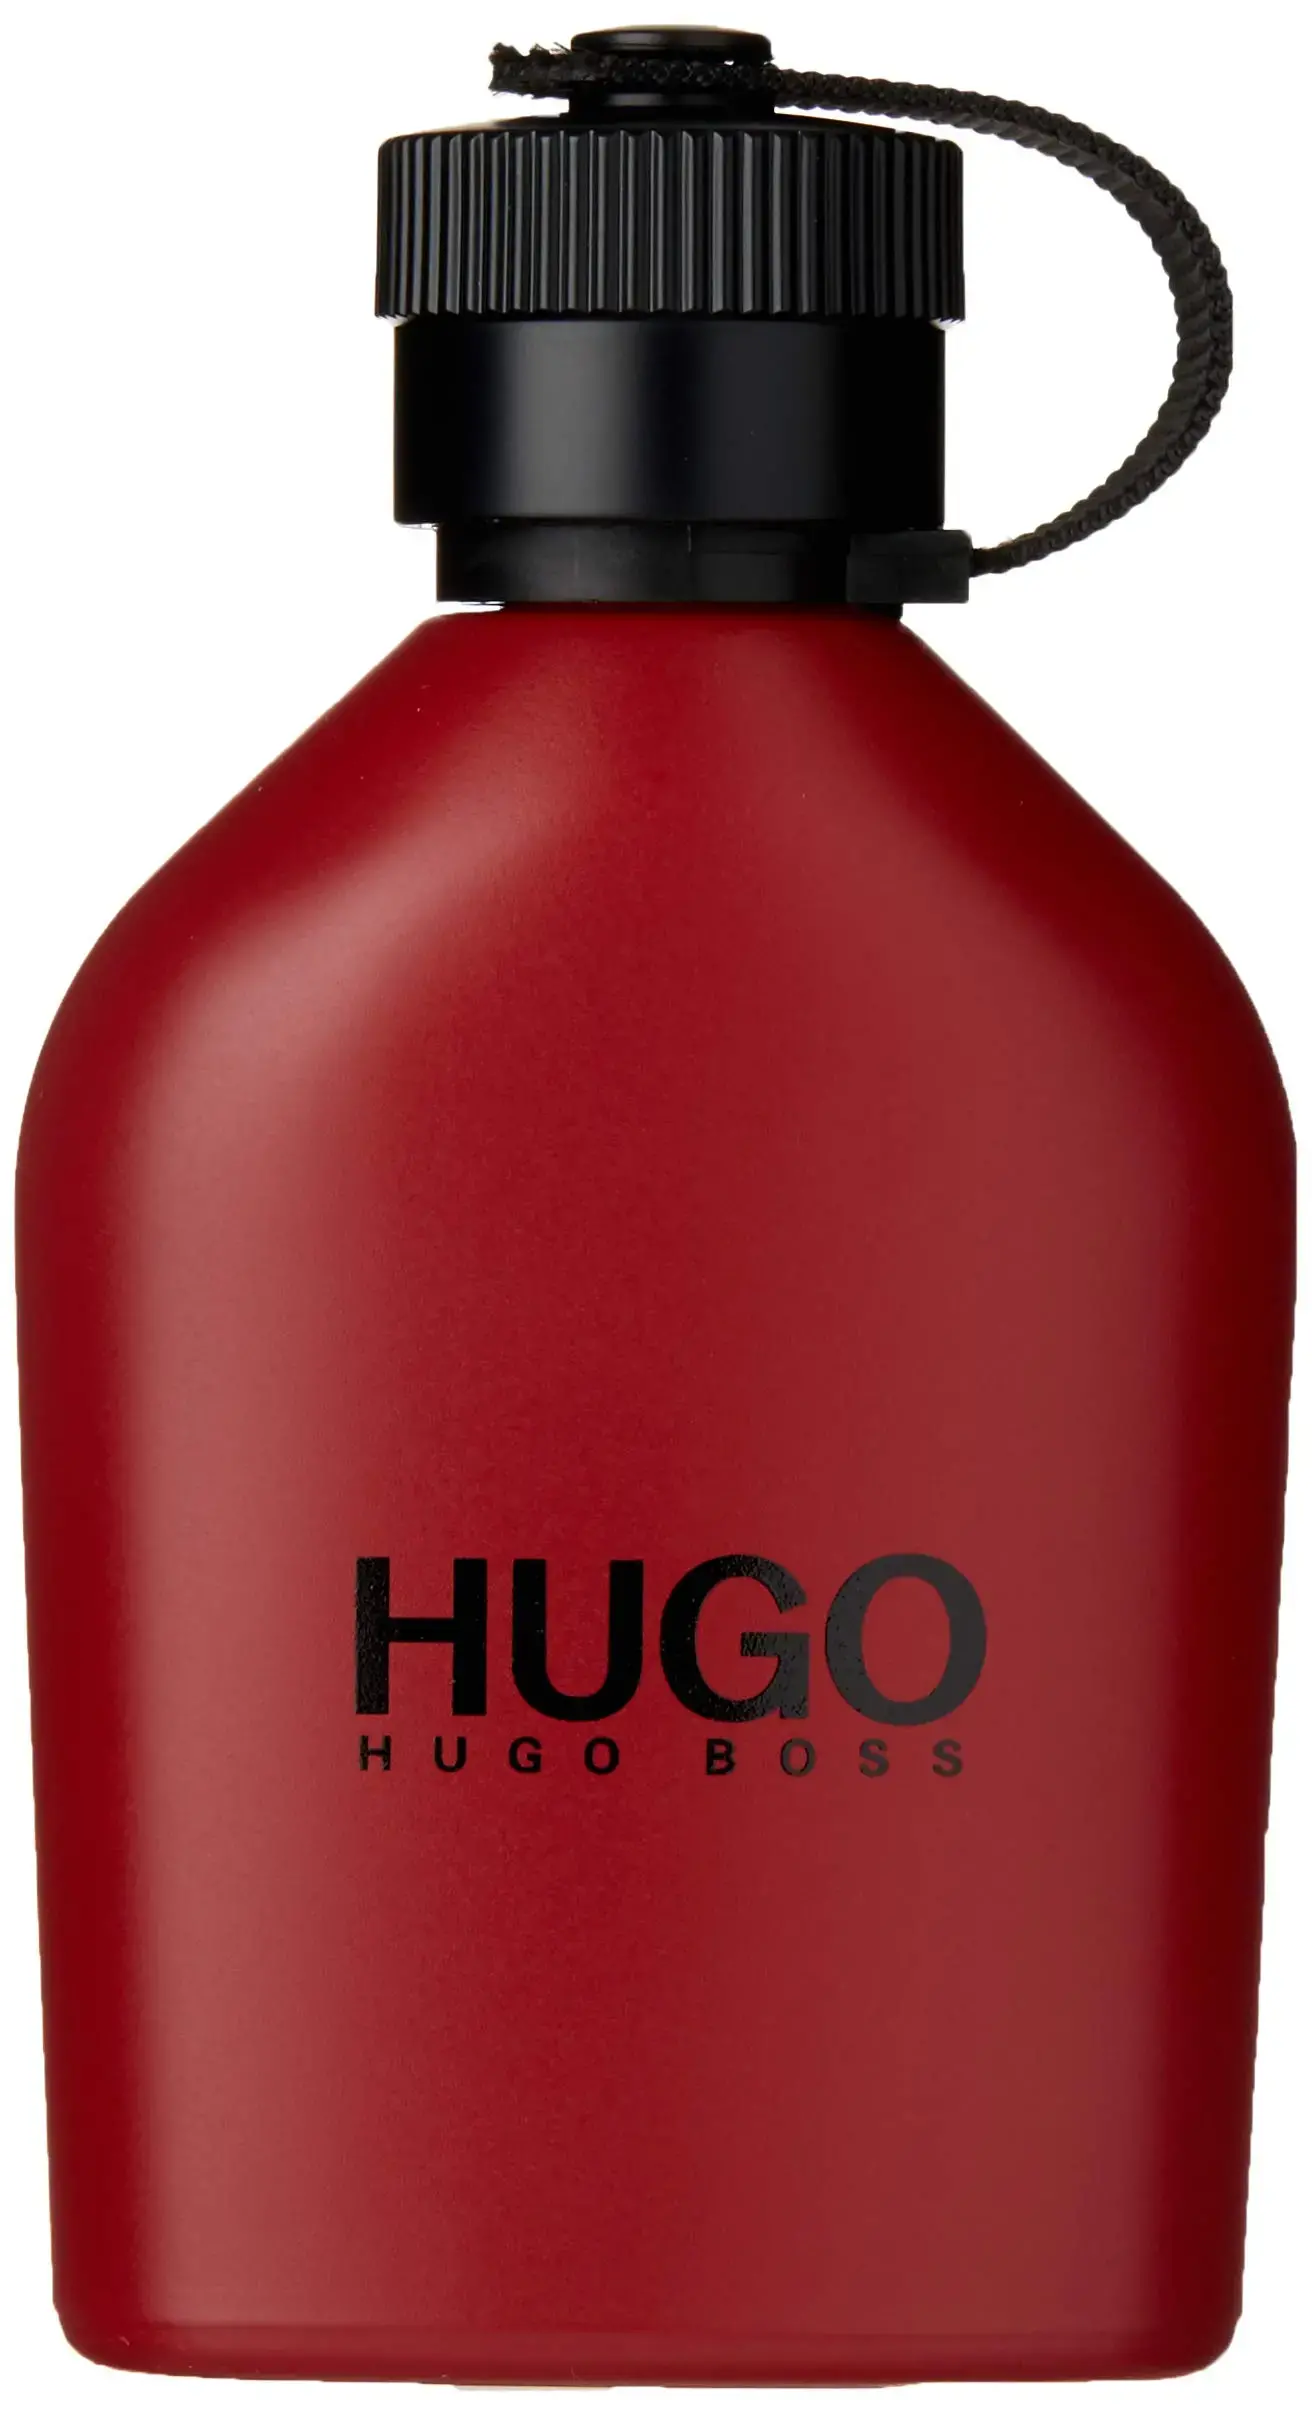 Hugo Boss Red Eau de Toilette. Hugo Boss "Hugo Red" EDT, 100ml. Hugo Boss man 125 ml. Hugo Boss Hugo Red men.